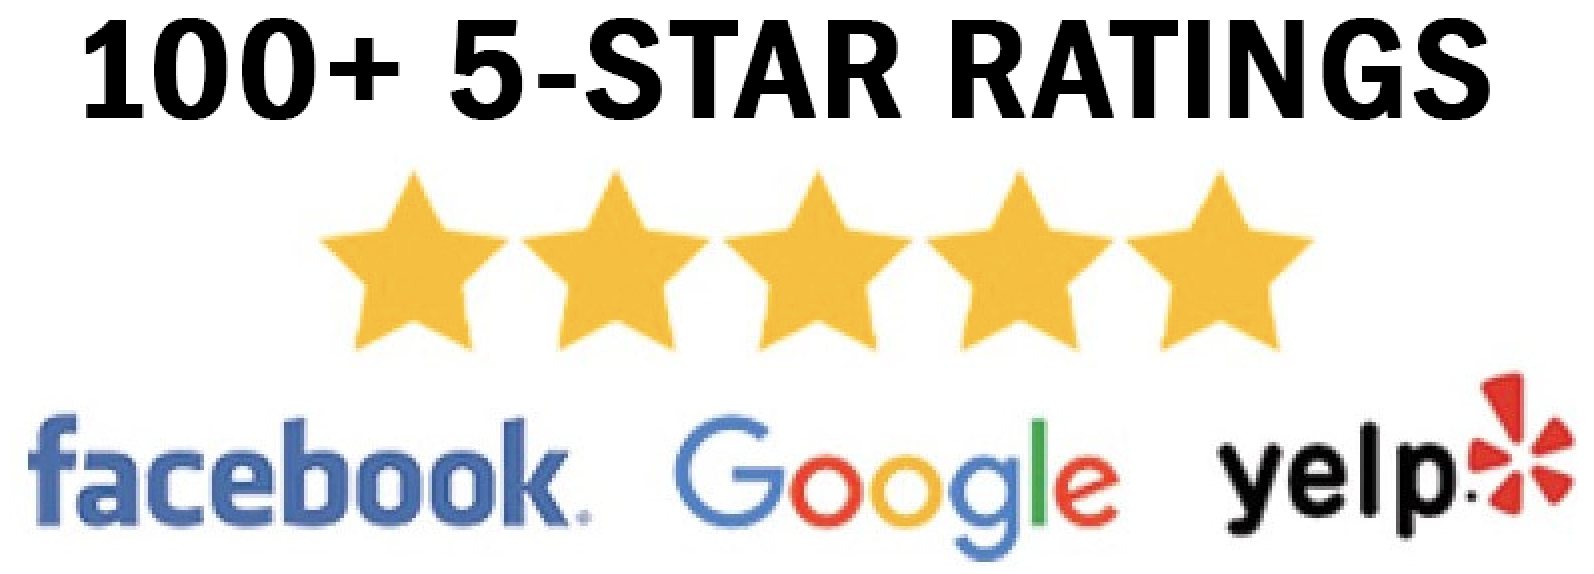 Krissart Marketing Design 5 star rating